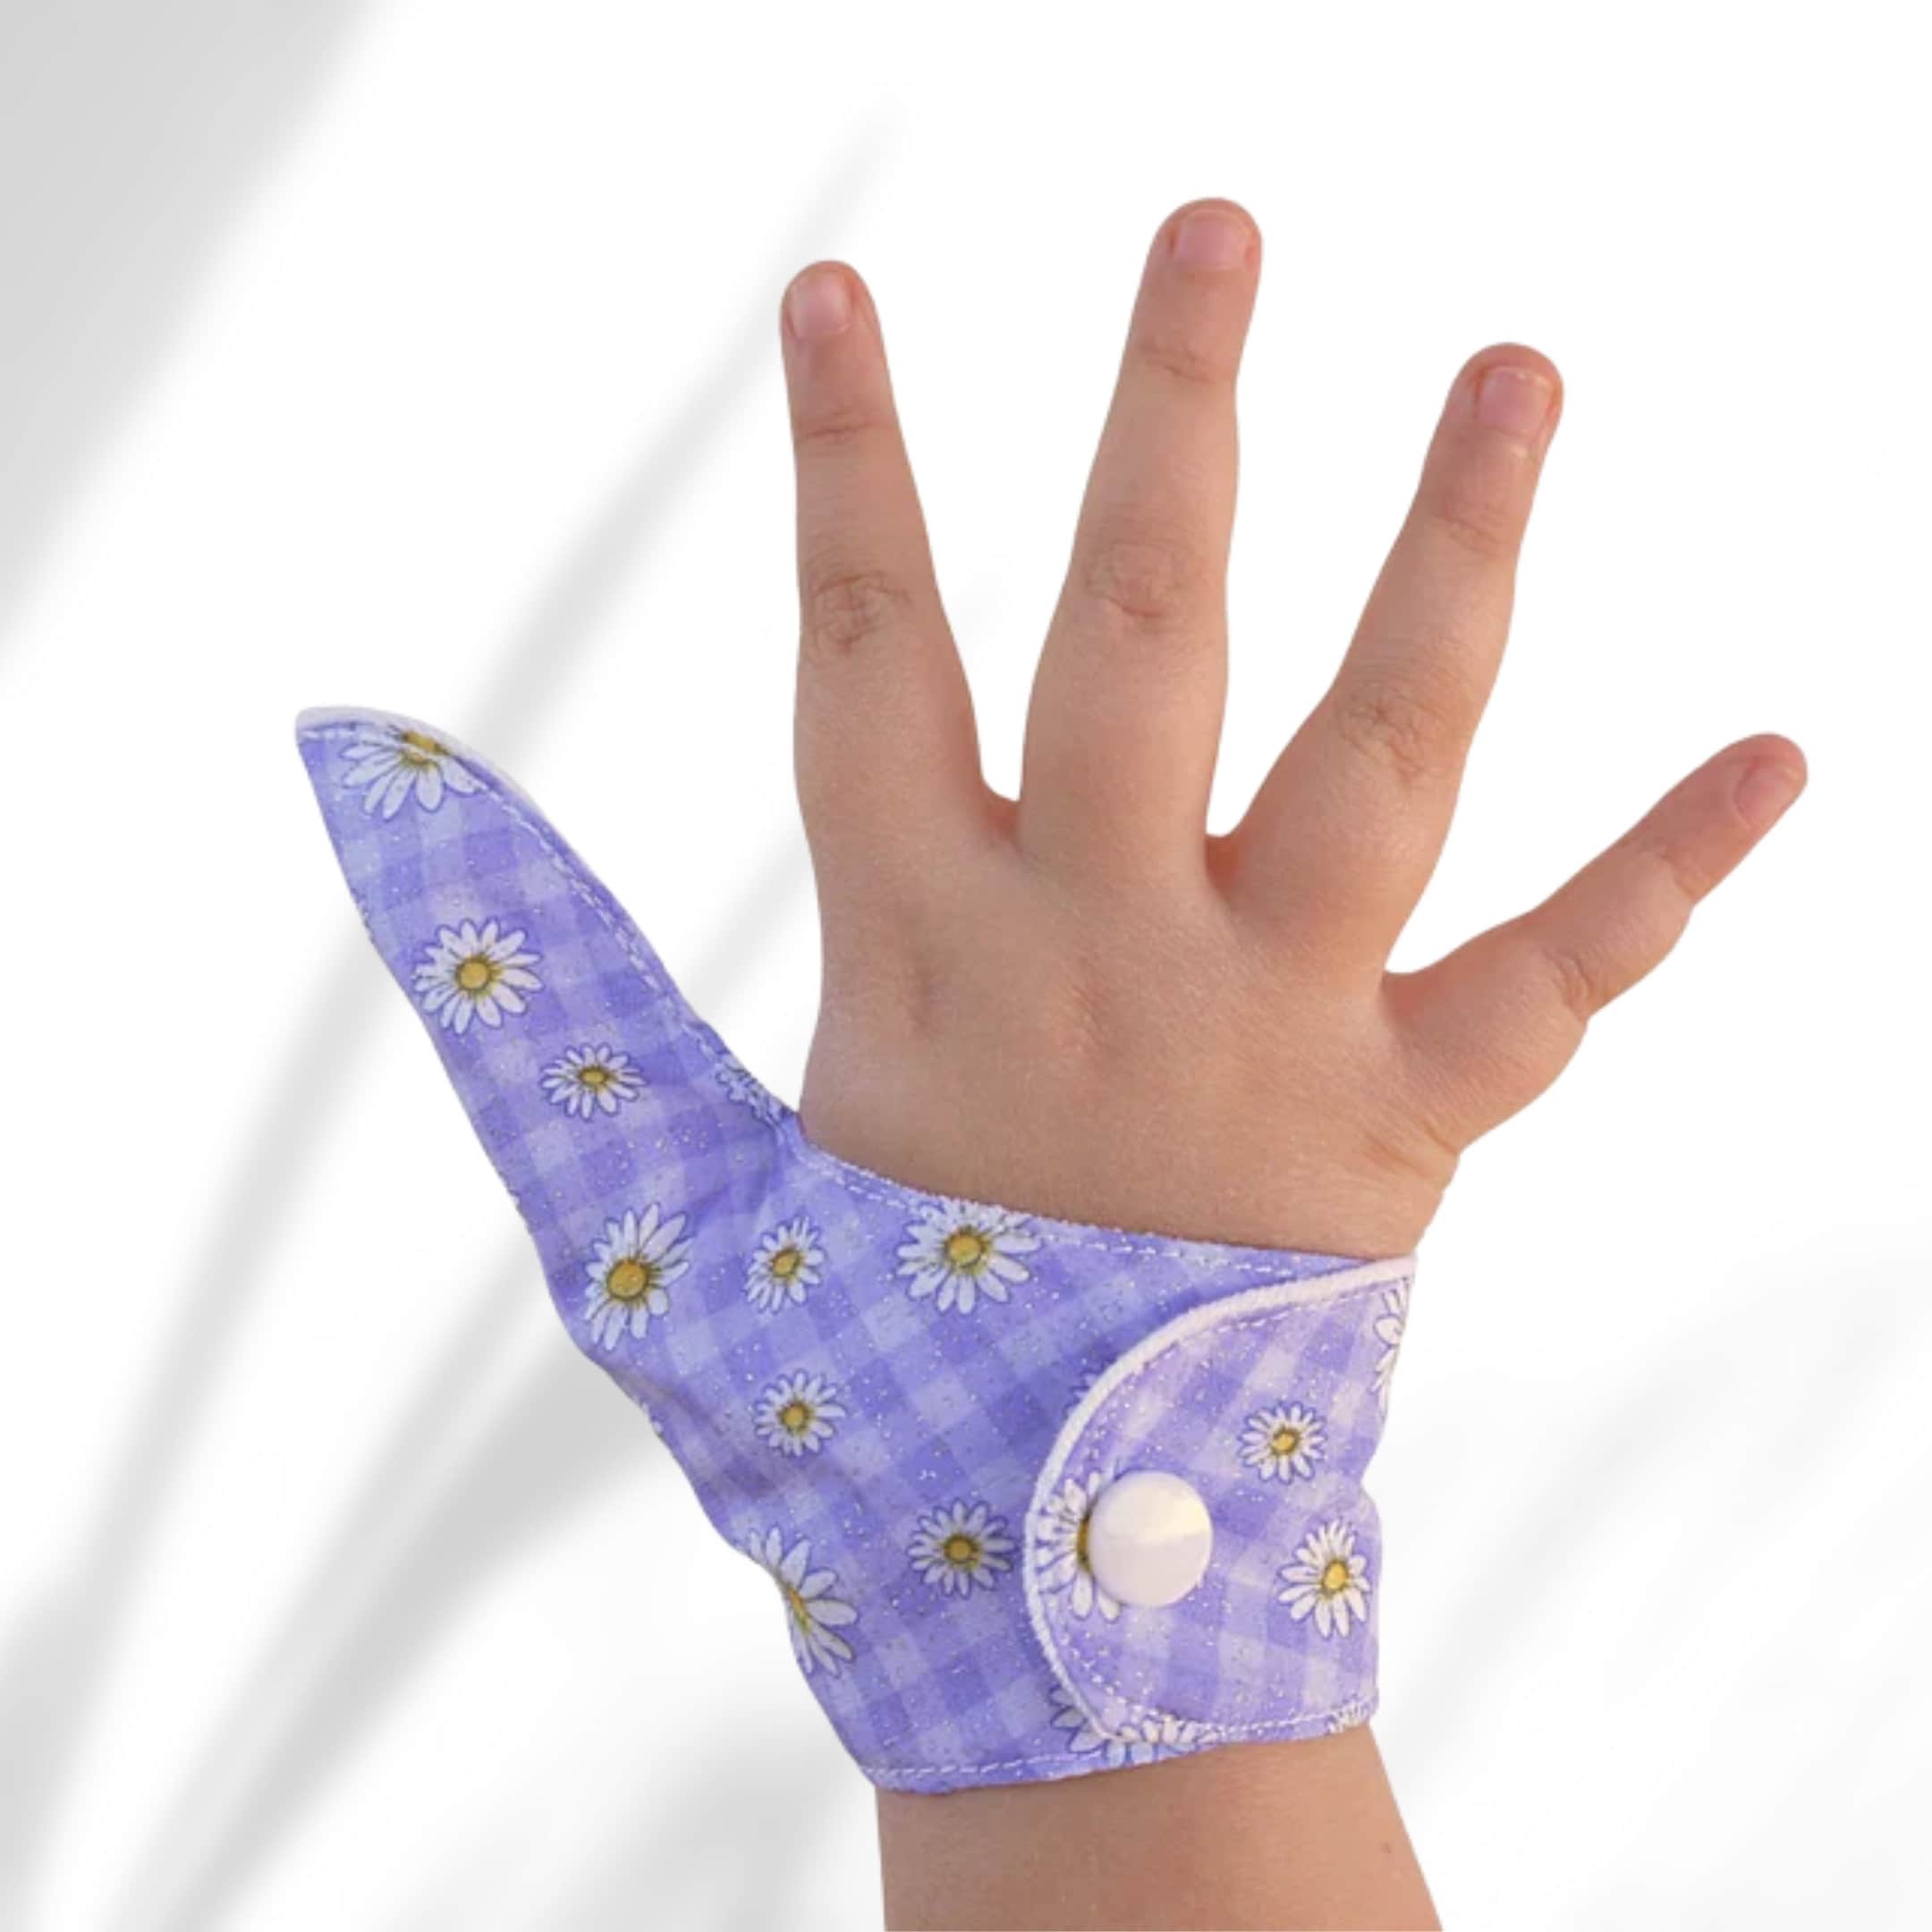 Thumb Sucking Blocker Fabric Barrier Glove to Help Stop Long